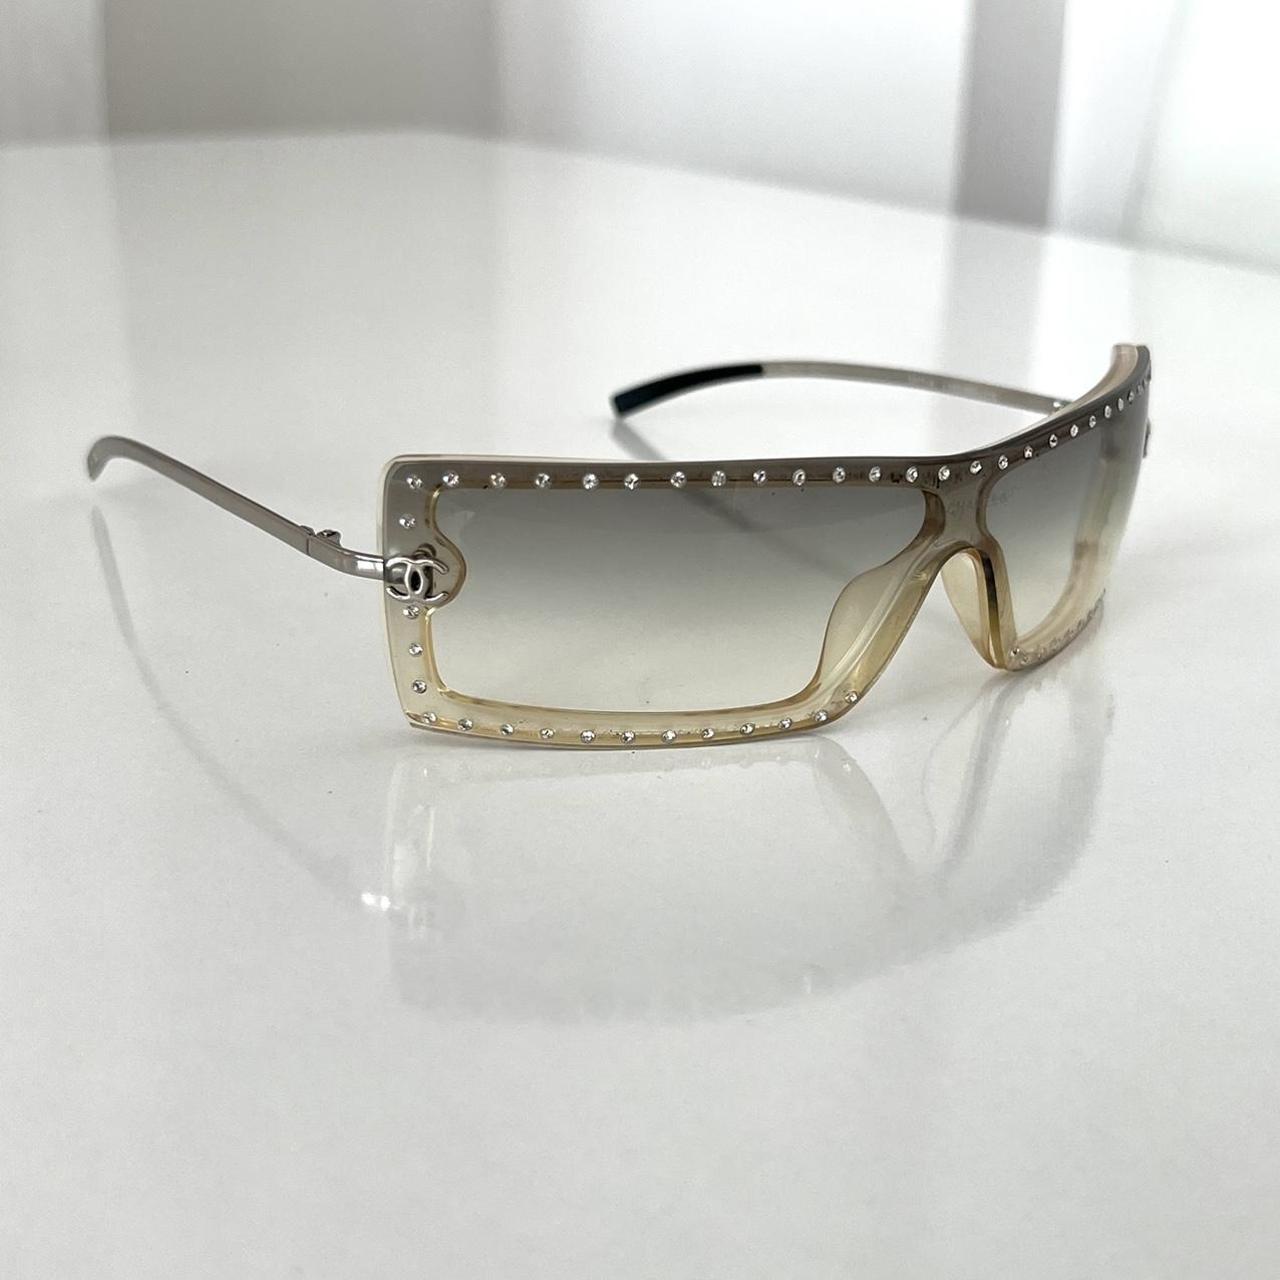 Original vintage chanel sunglasses 7/10 condition - Depop